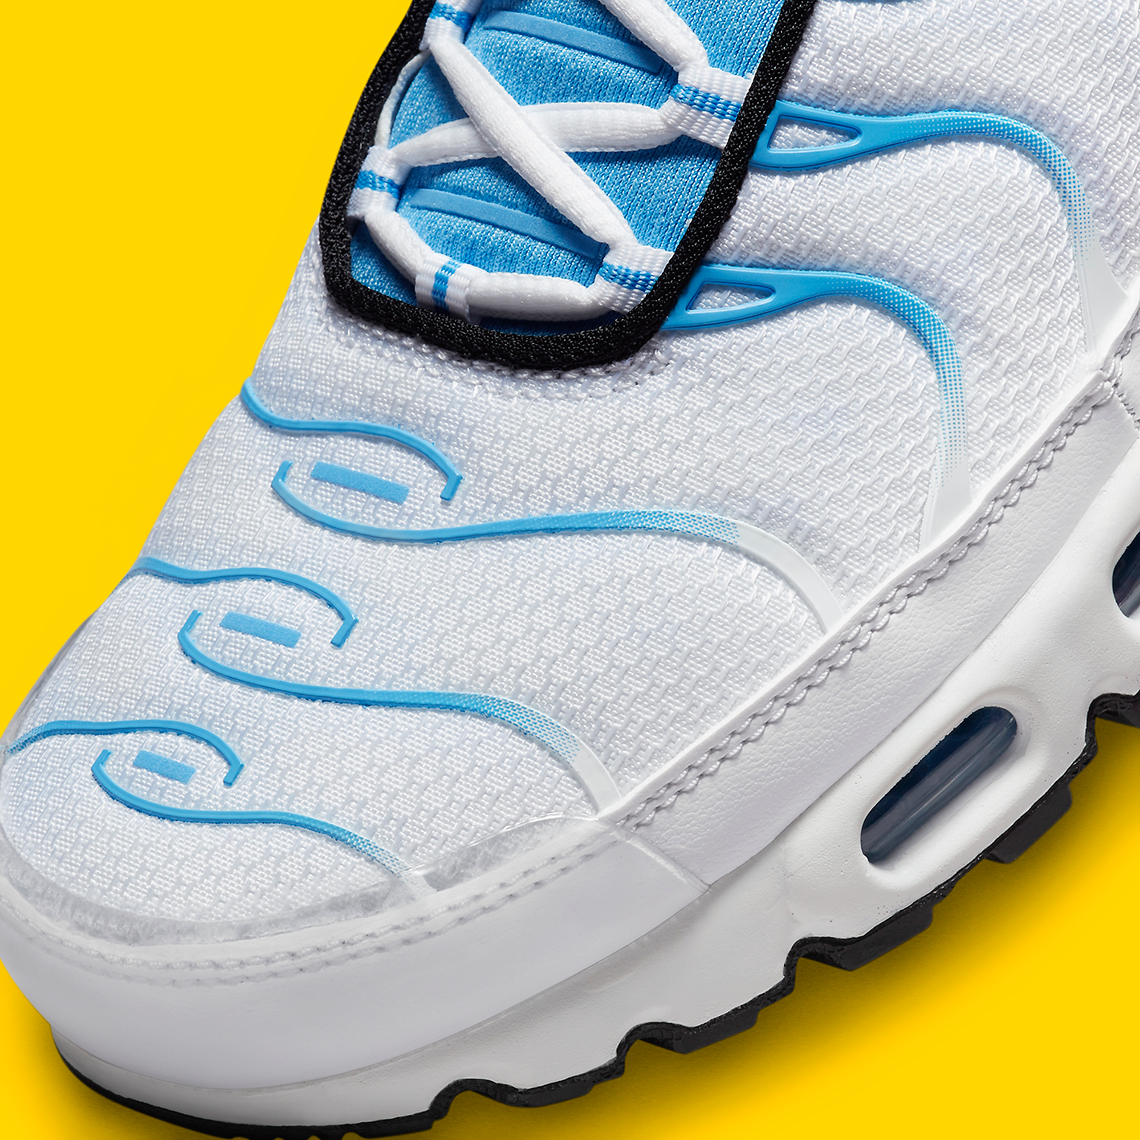 Nike size nike air max tavas foot locker 2017 White University Blue Yellow Dm0032 101 5